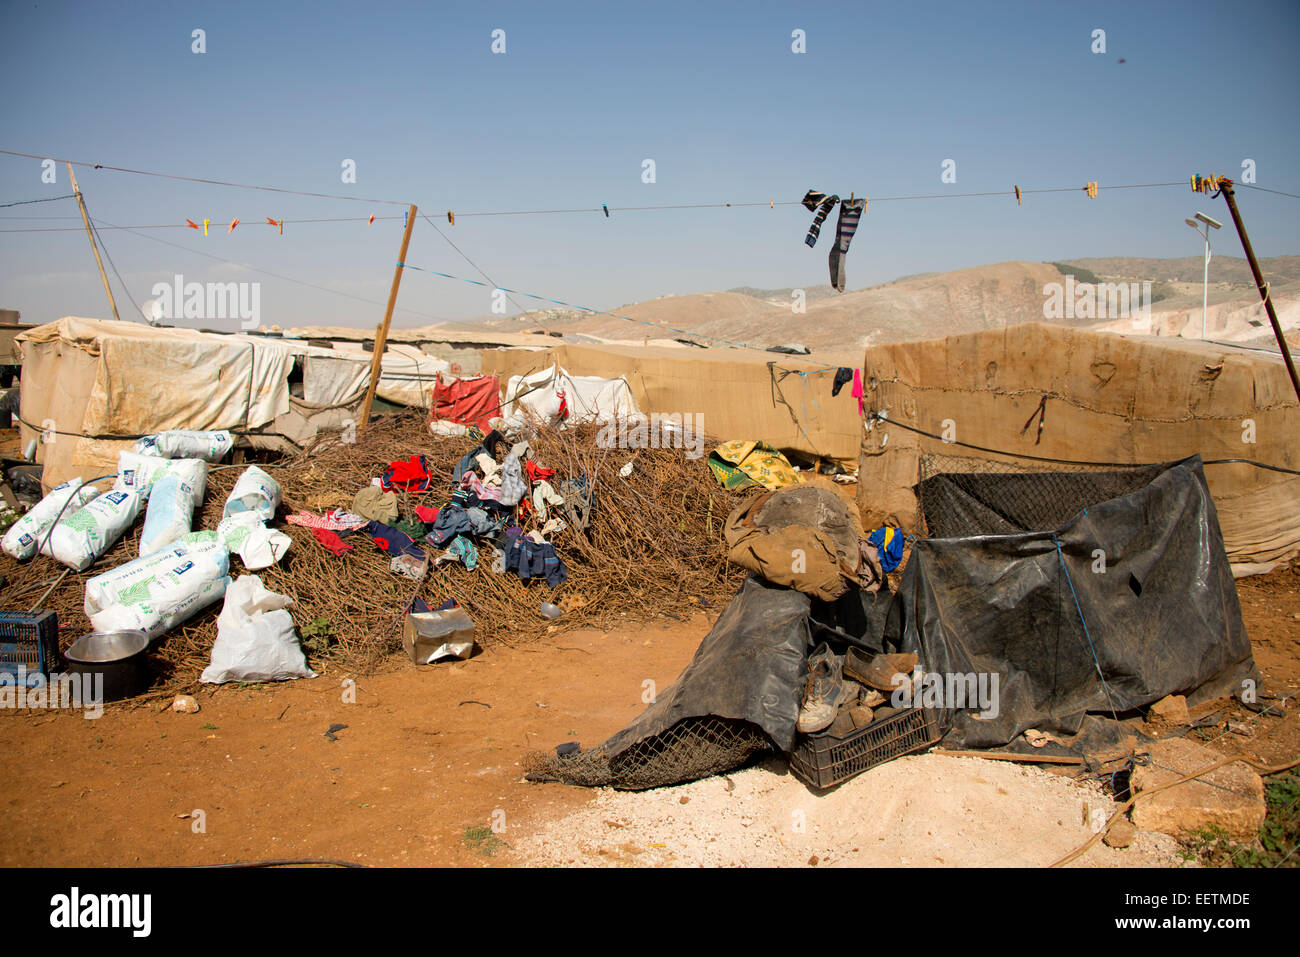 Refugee camp rubbish and washing, Lebanon Stock Photo